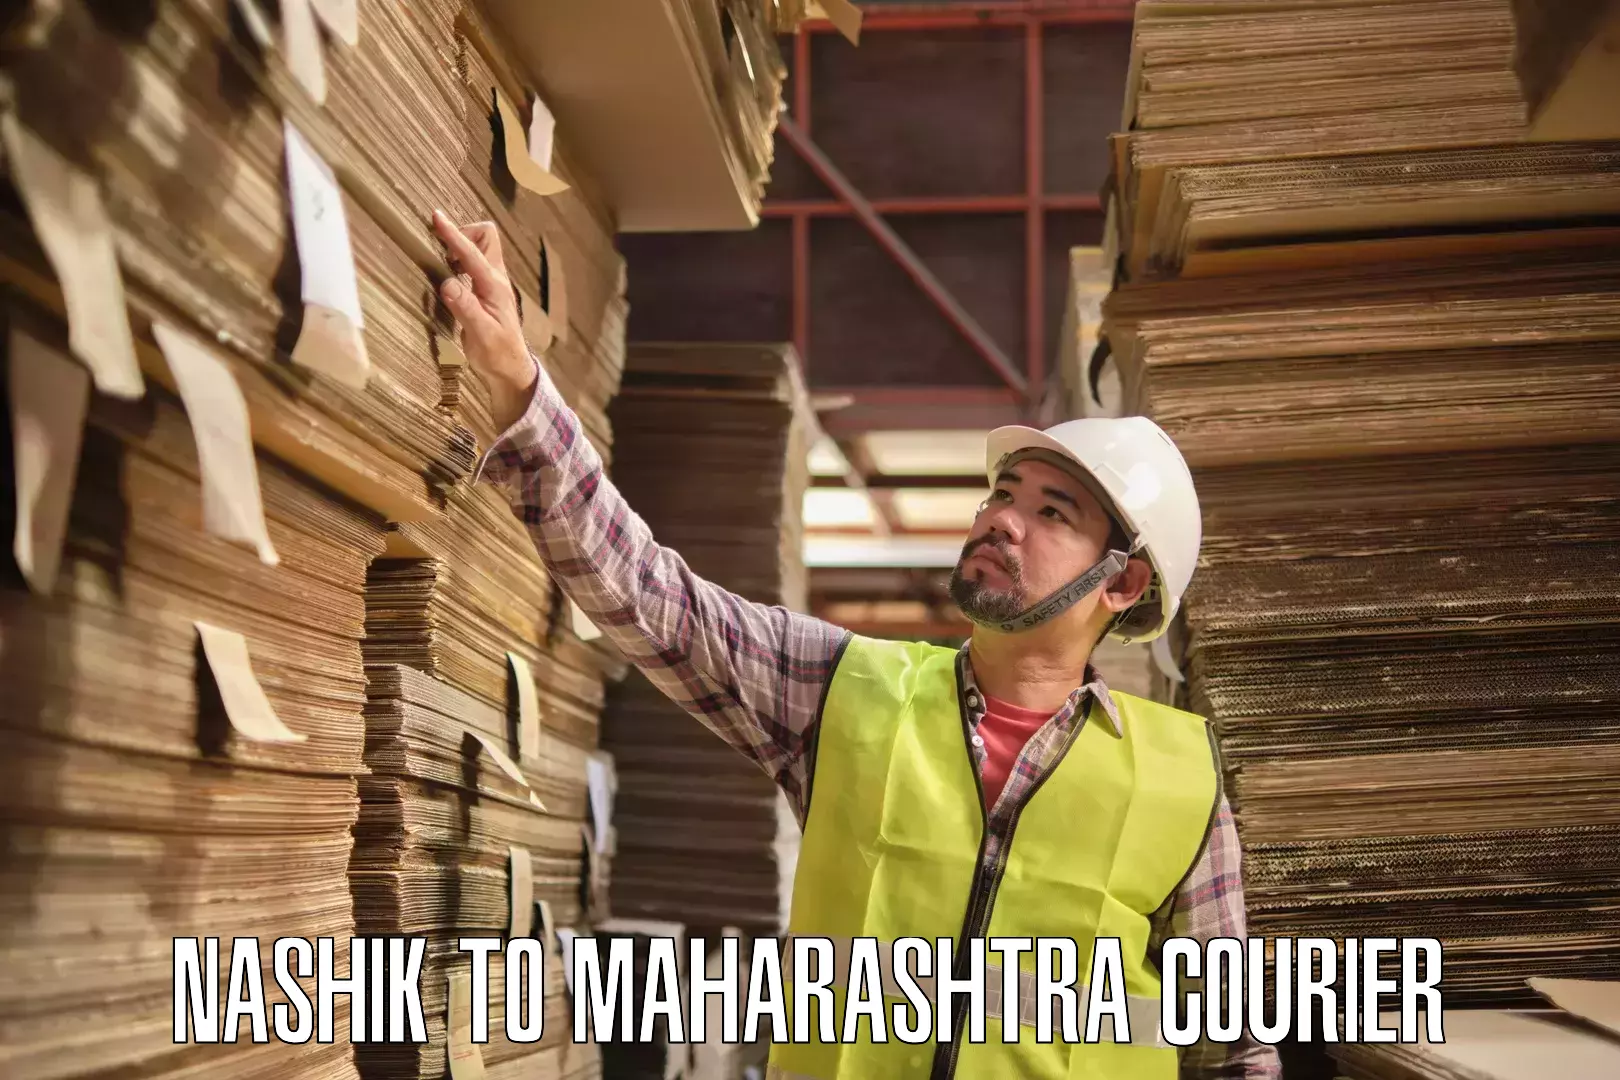 Reliable freight solutions Nashik to Maharashtra